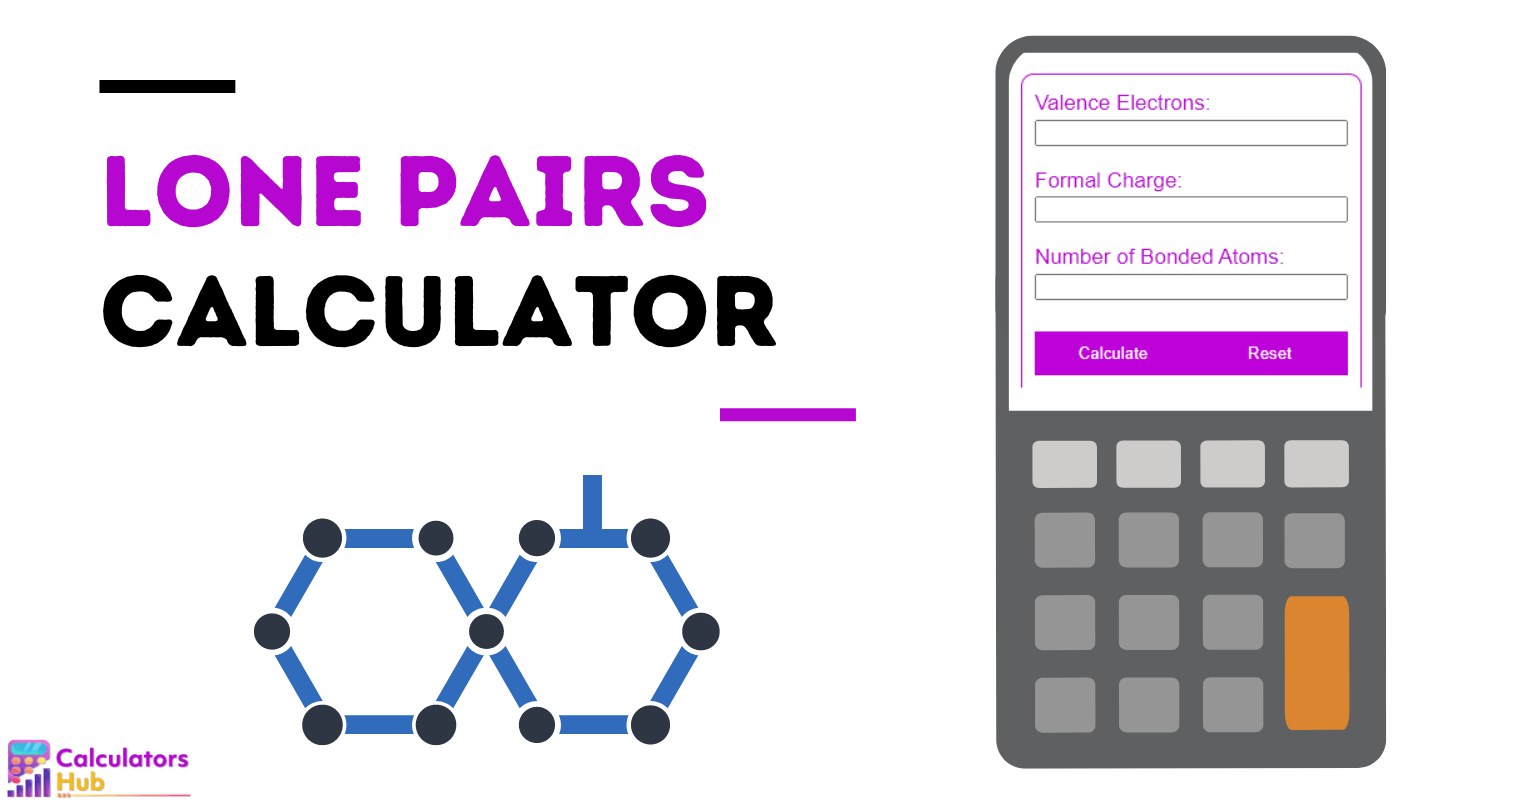 Lone Pairs Calculator